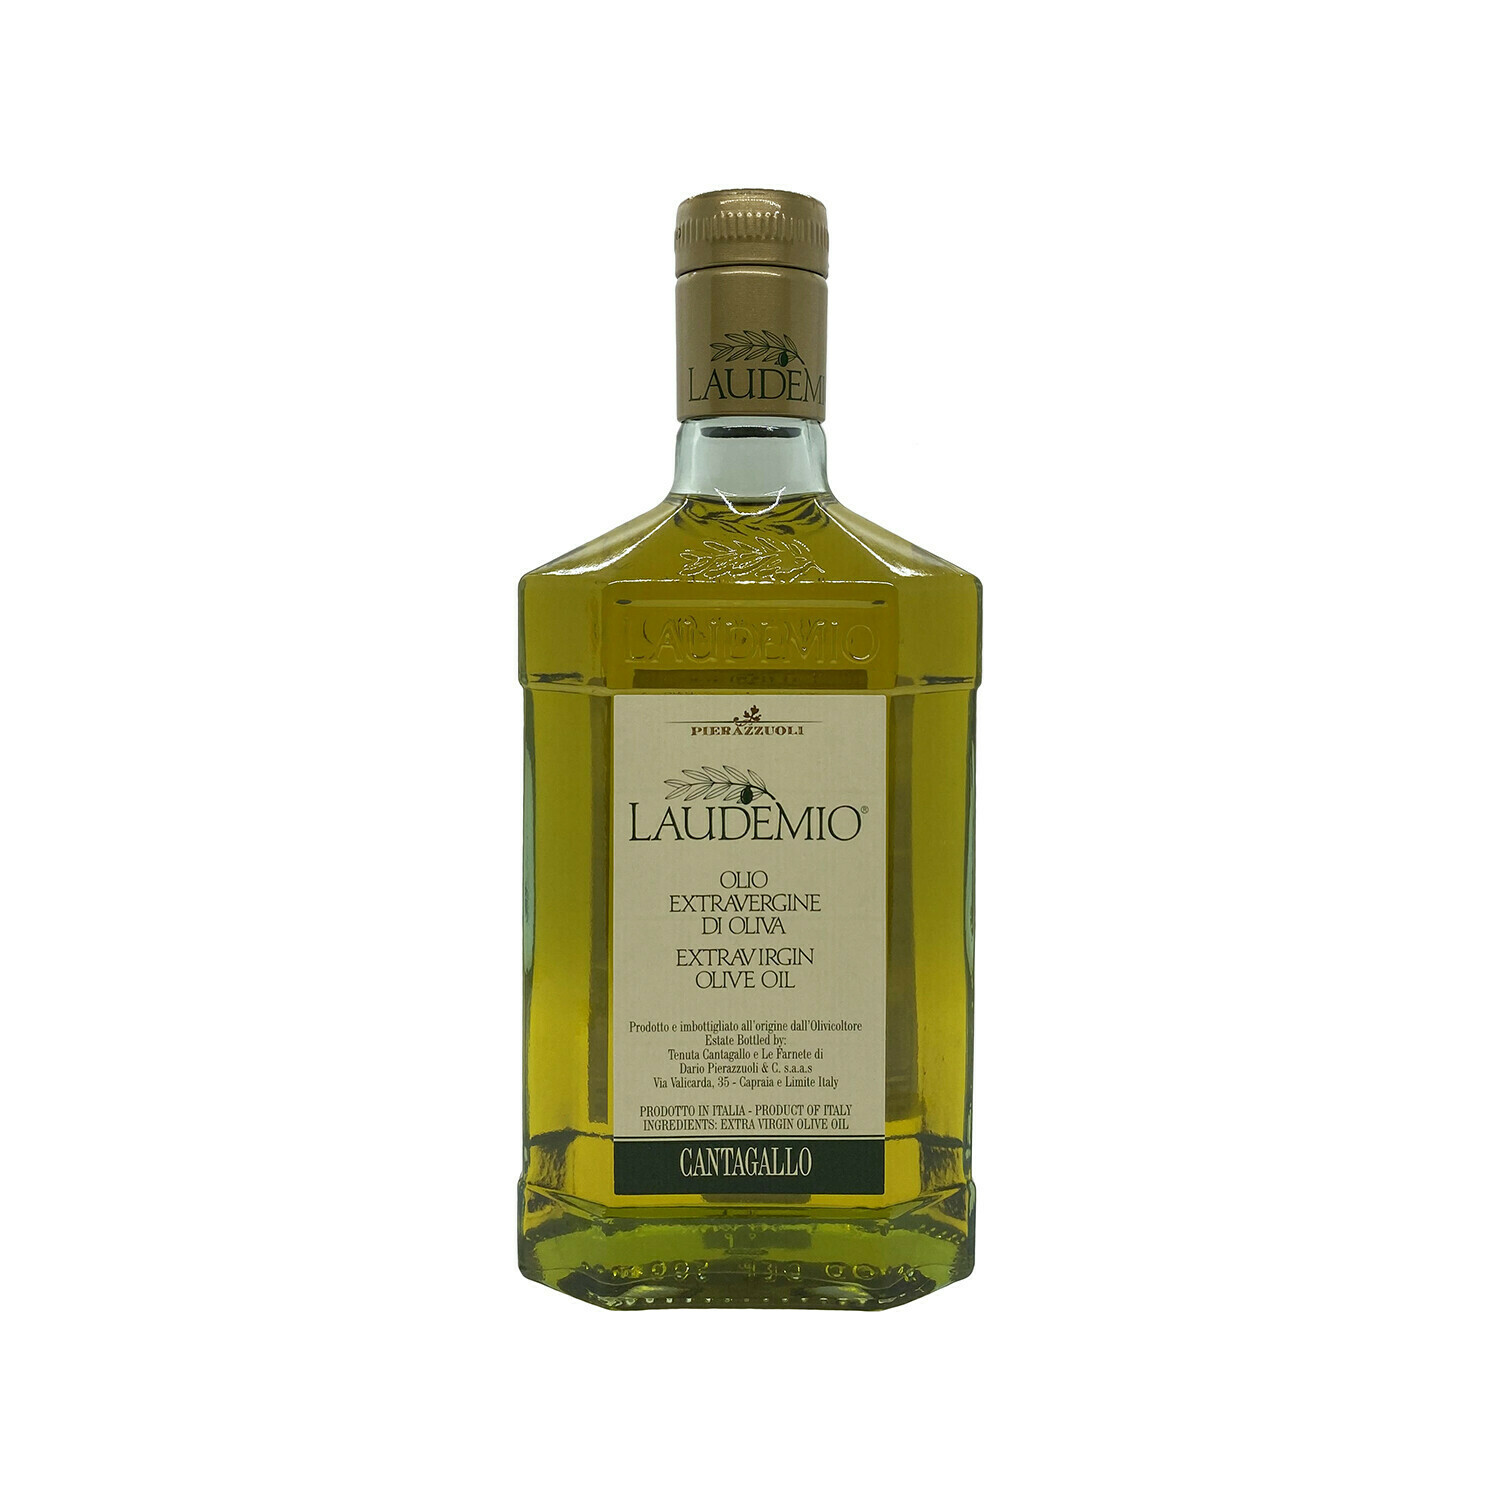 Laudemio EV Olive Oil Toscana 500ml Italy